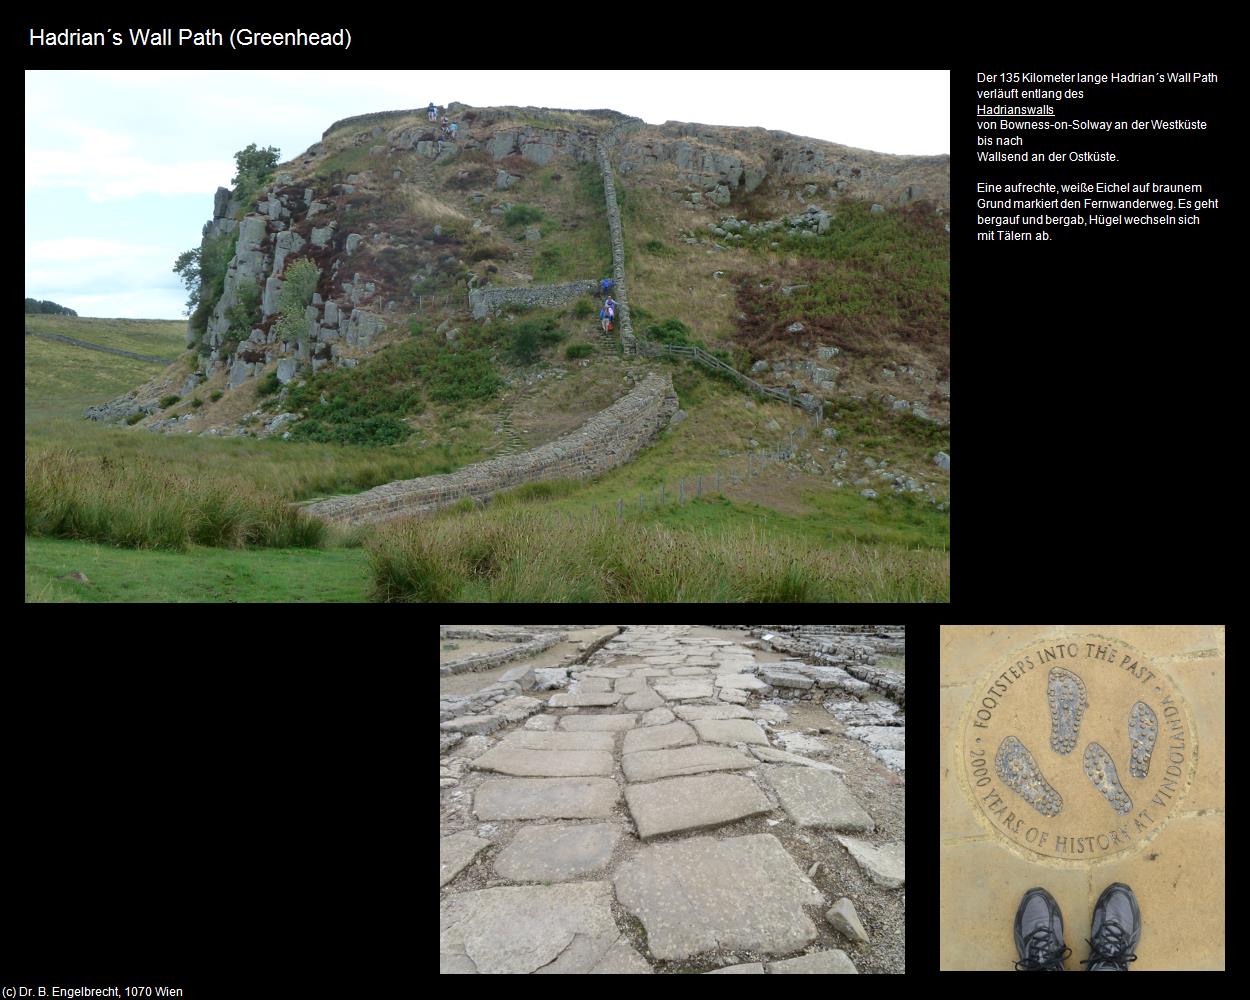 Hadrian‘s Wall Path (Greenhead, England) in Kulturatlas-ENGLAND und WALES(c)B.Engelbrecht